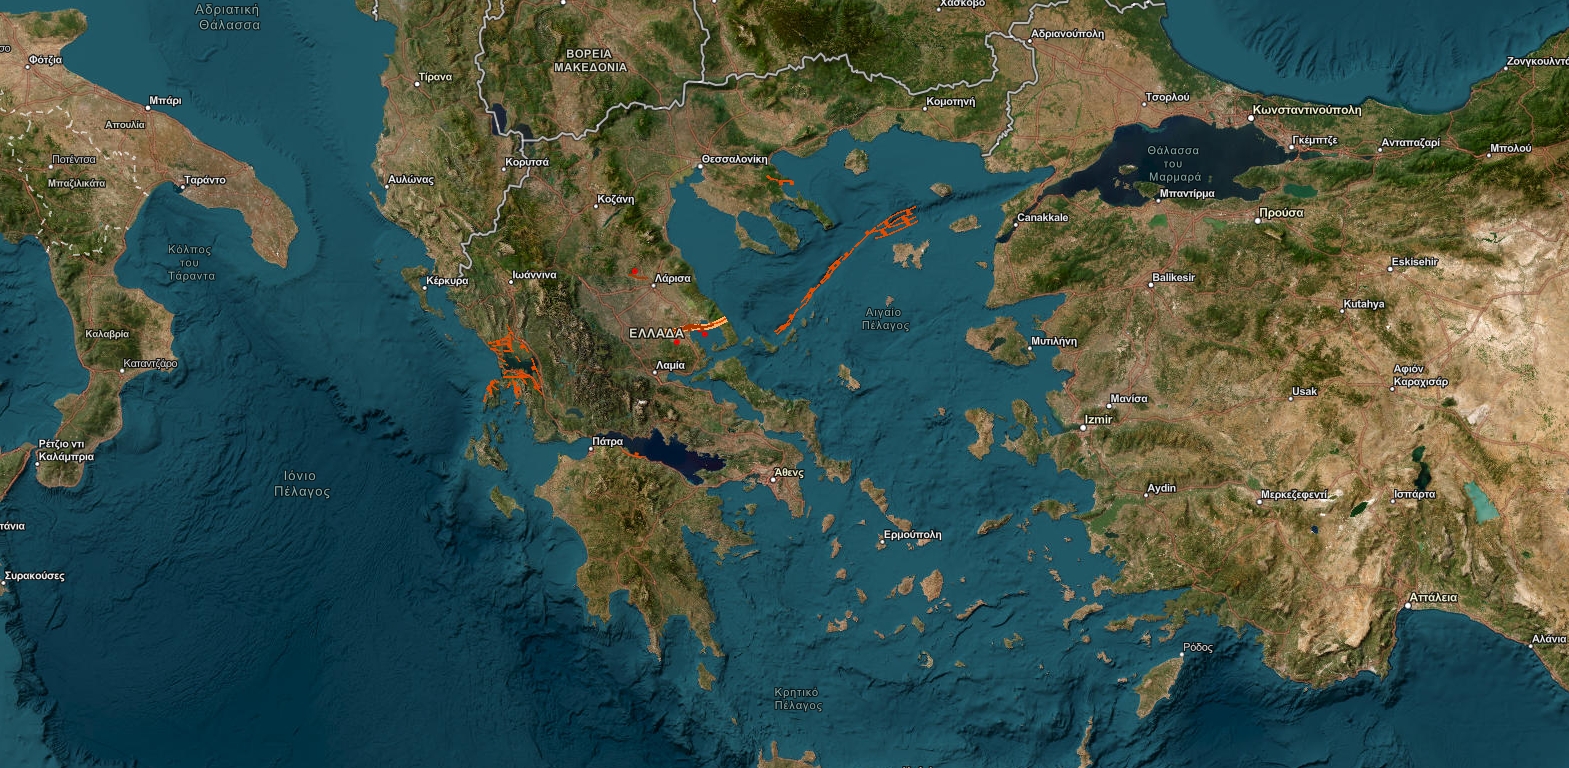 More information about "ΕΑΓΜΕ: Όλα τα σεισμικά ρήγματα της χώρας σε έναν ψηφιακό χάρτη"